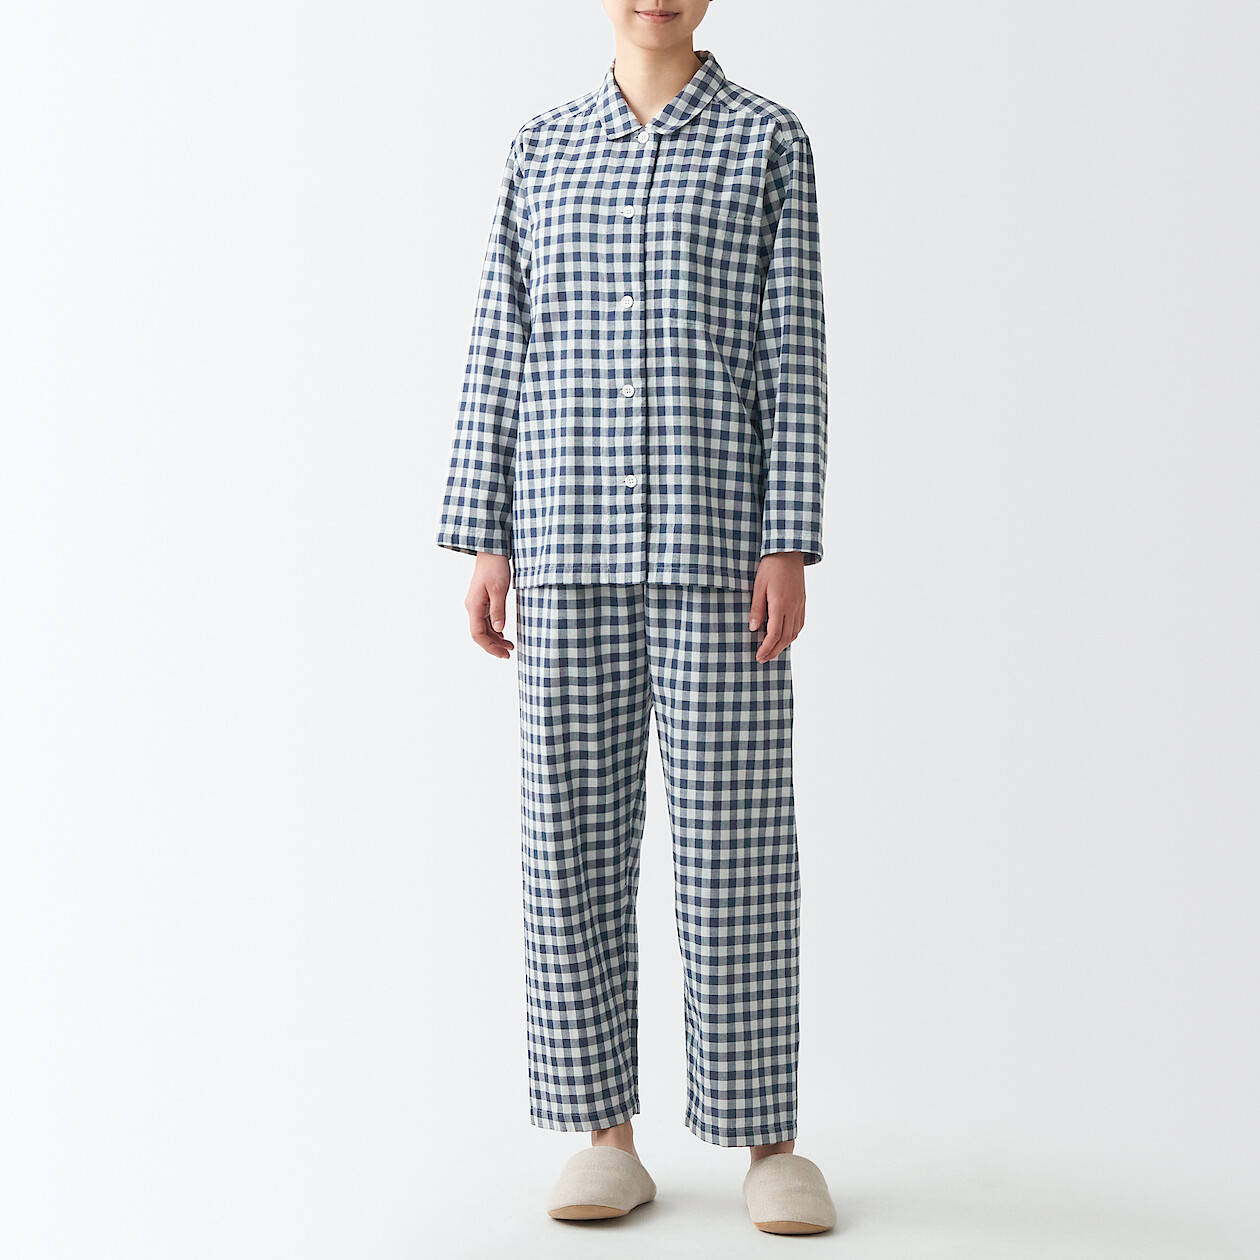 Shop Side Seamless Double Gauze Pajamas online | Muji UAE